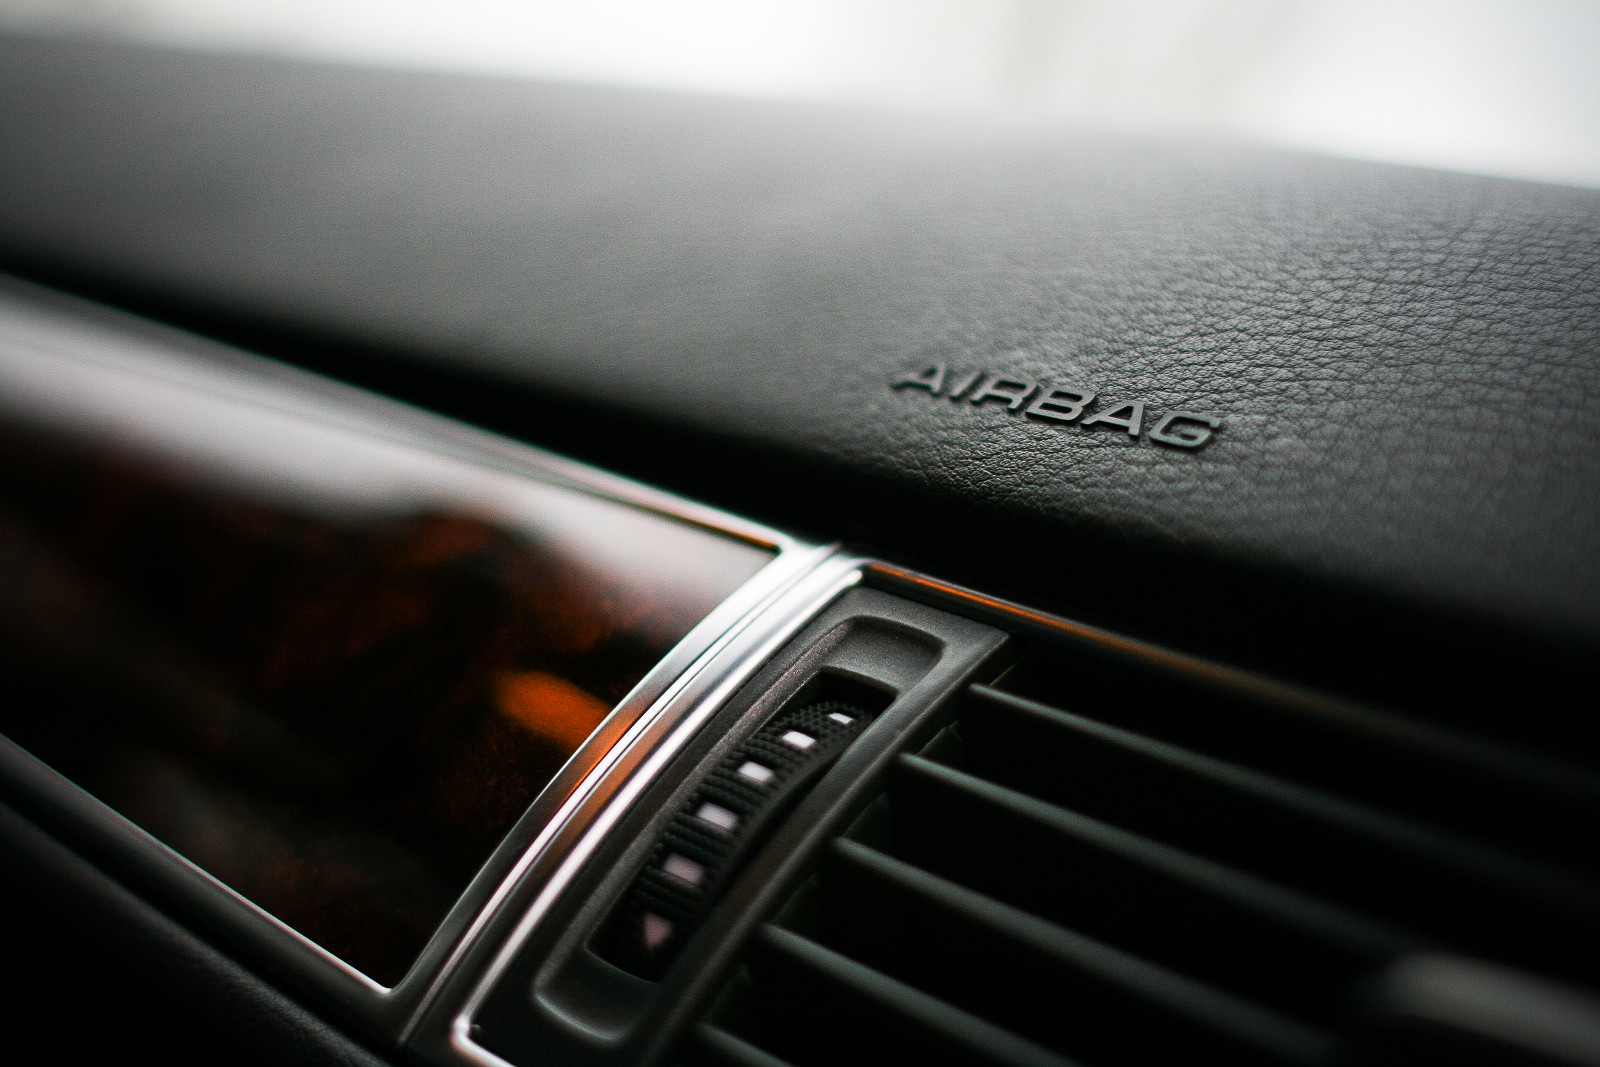 airbag-mark-on-a-dashboard-picjumbo-com.jpg [4.74 MB]